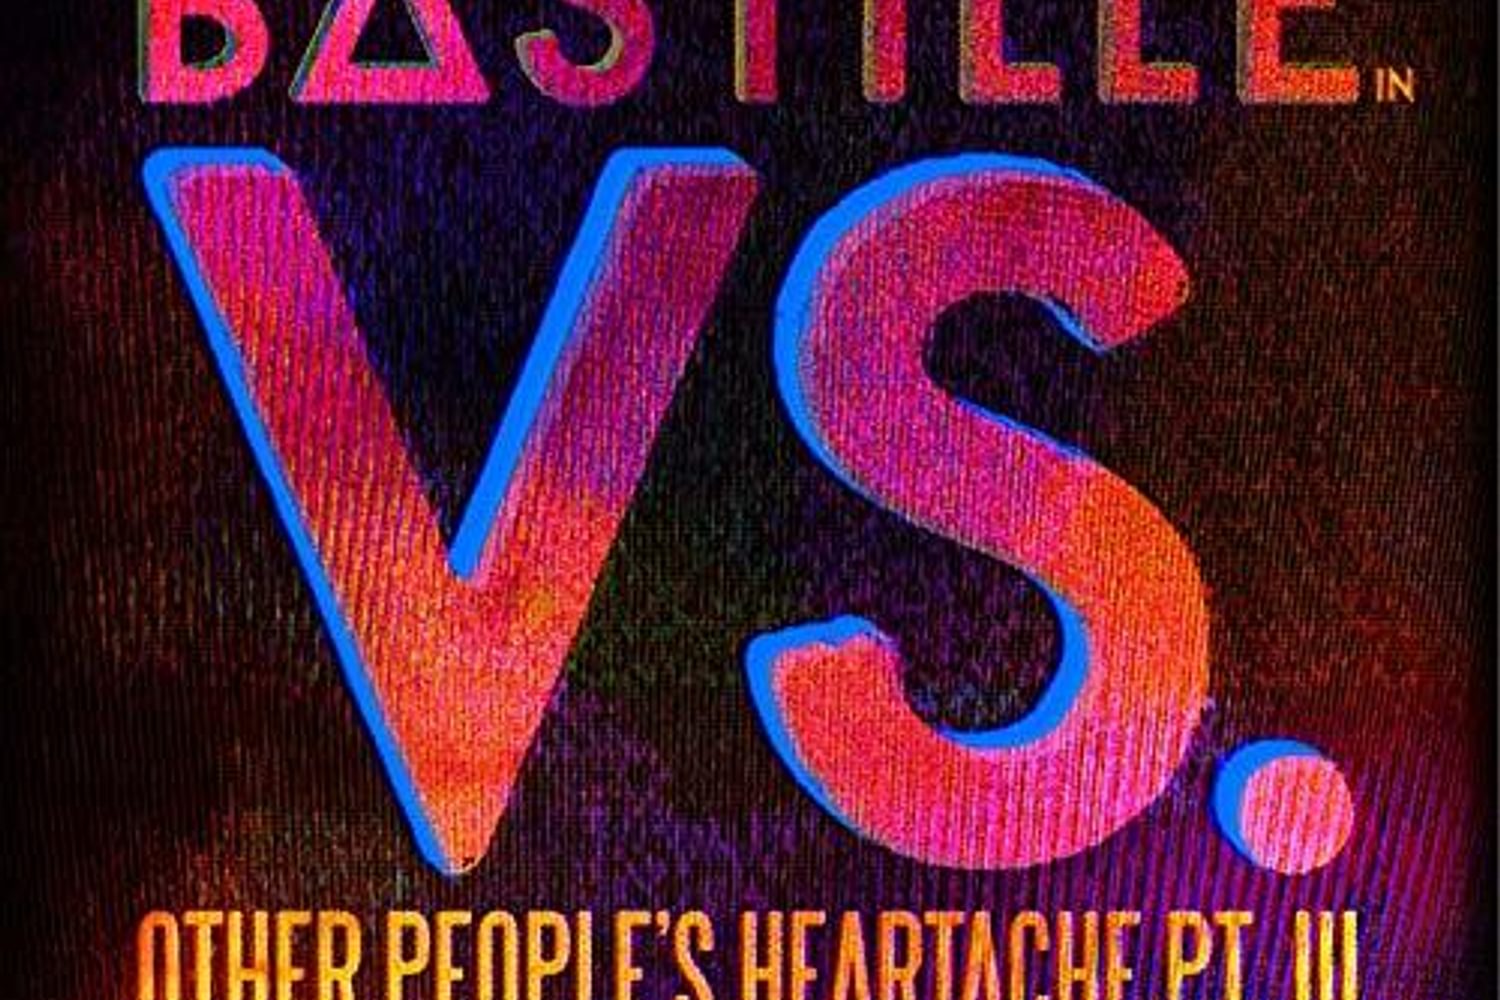 Bastille - Vs. (Other People's Heartache Pt. III)